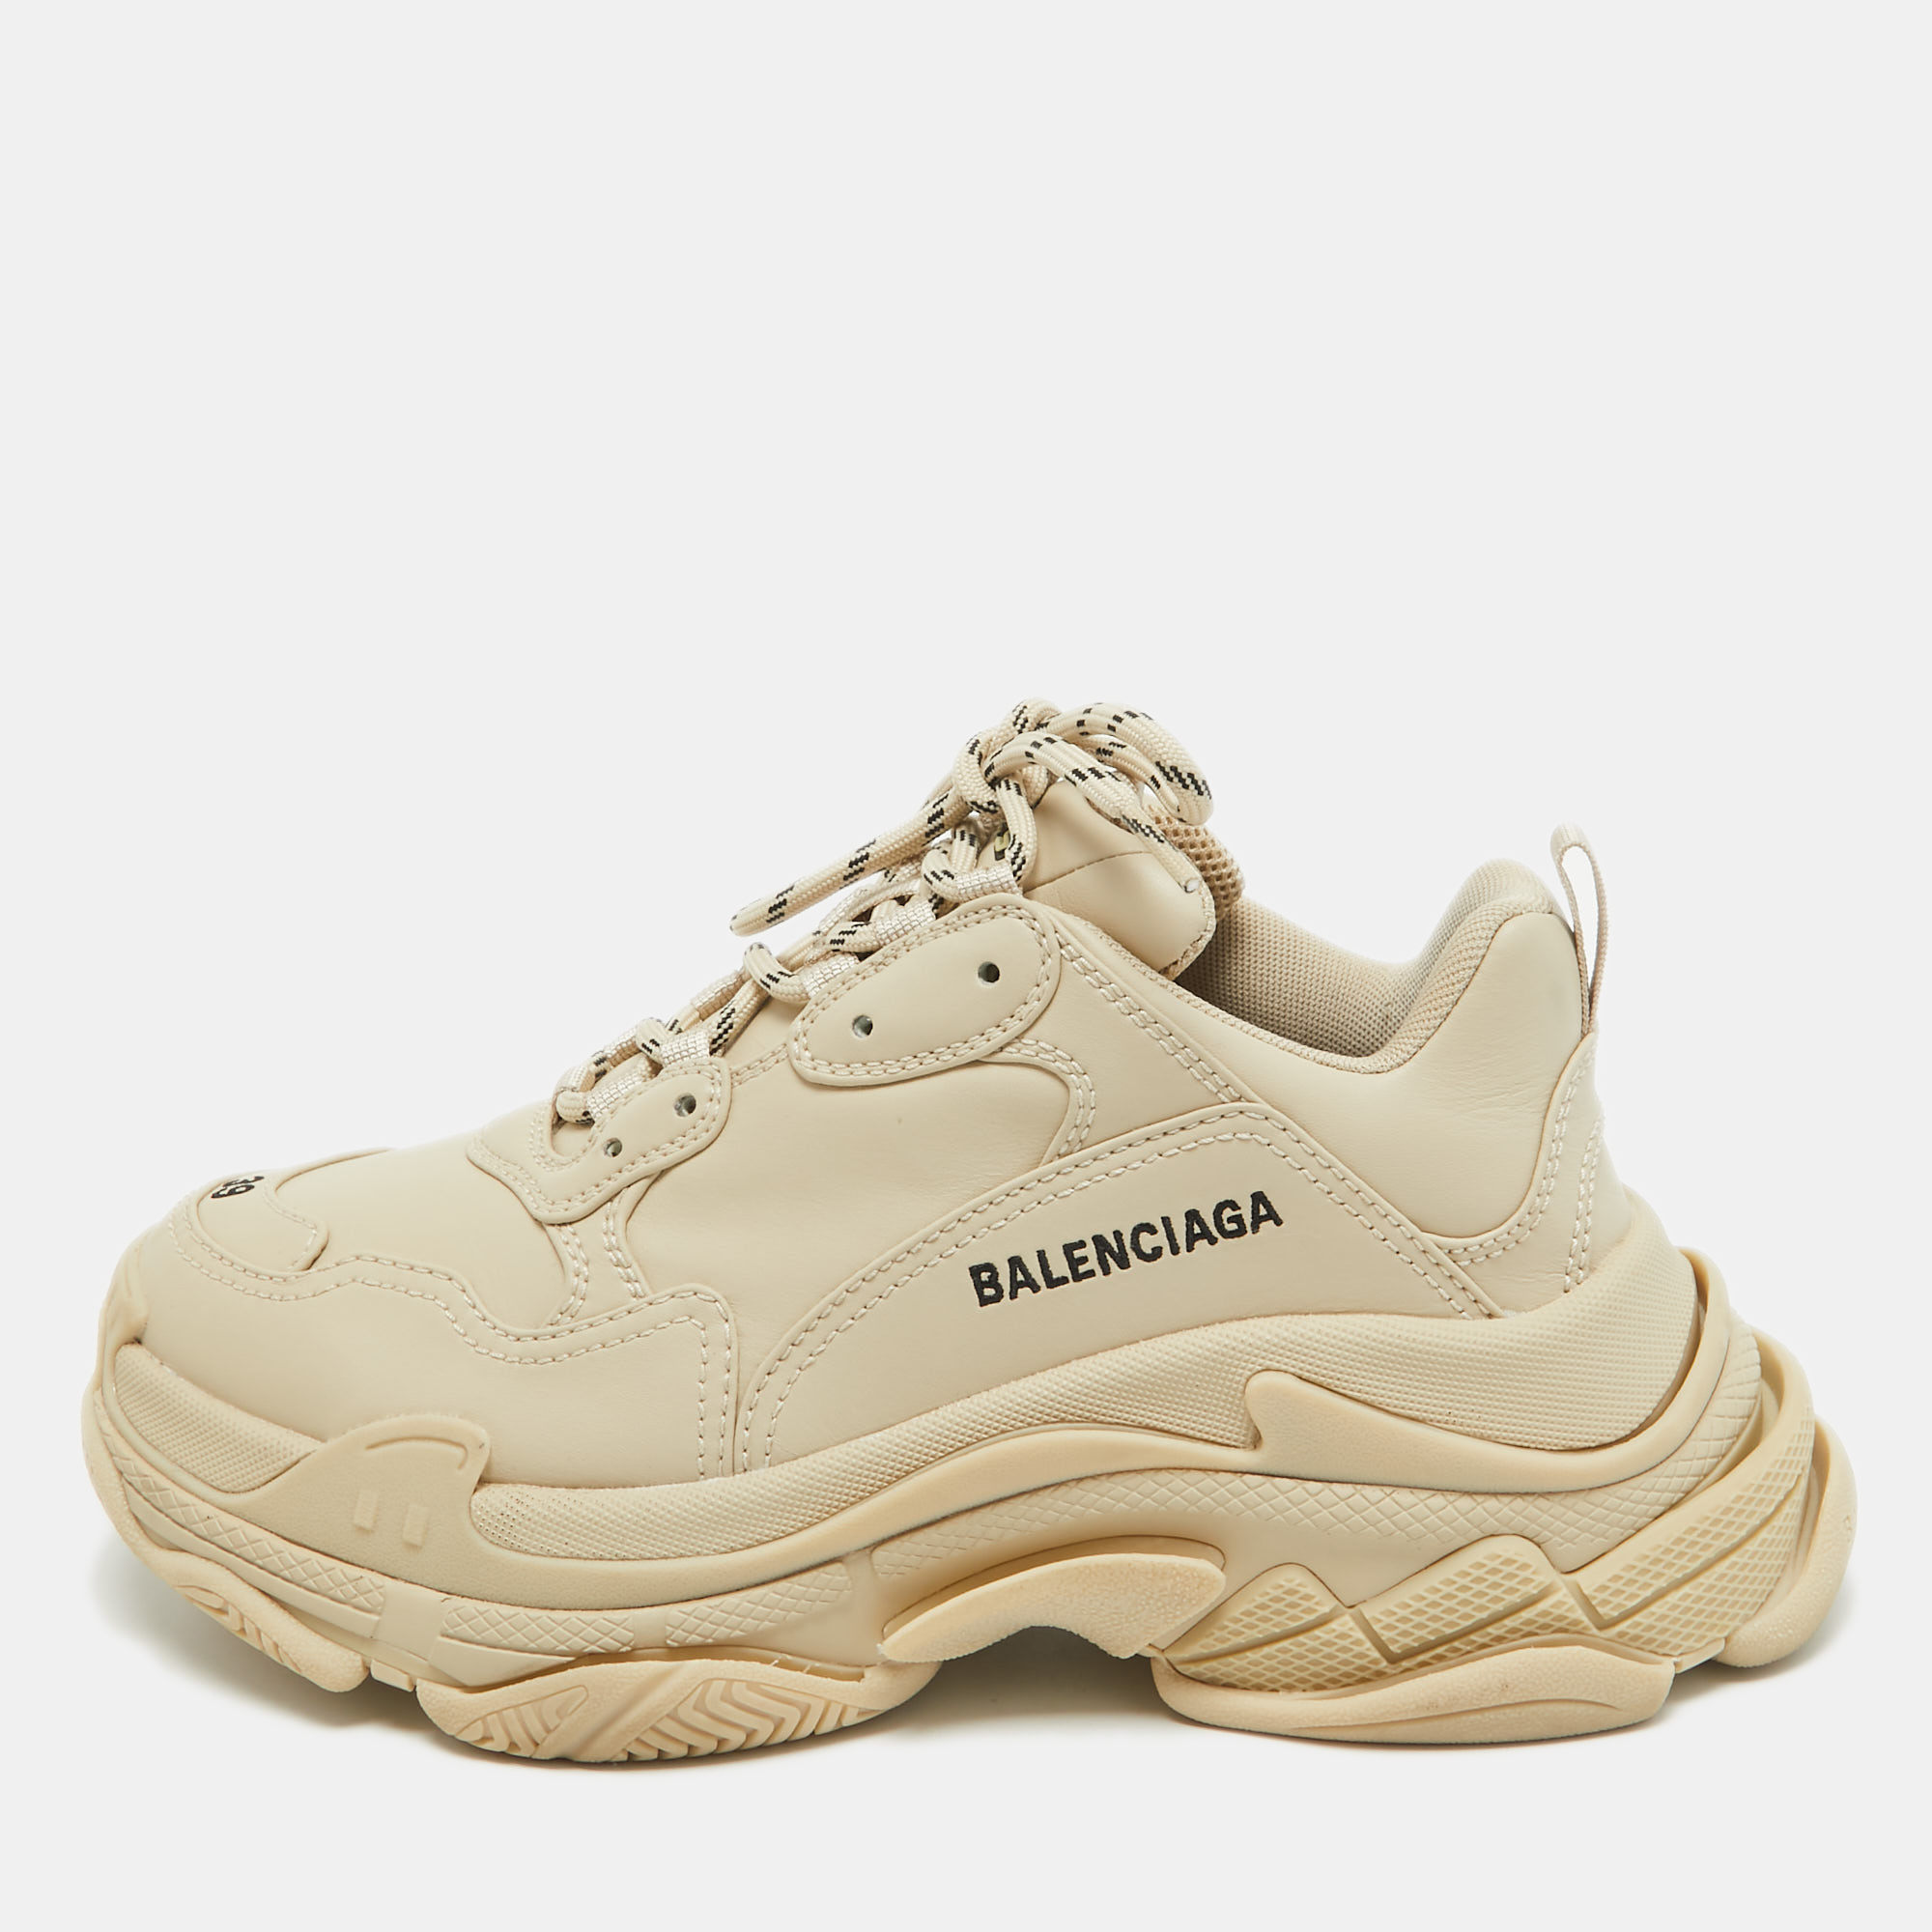 Balenciaga beige faux leather triple s sneakers size 39